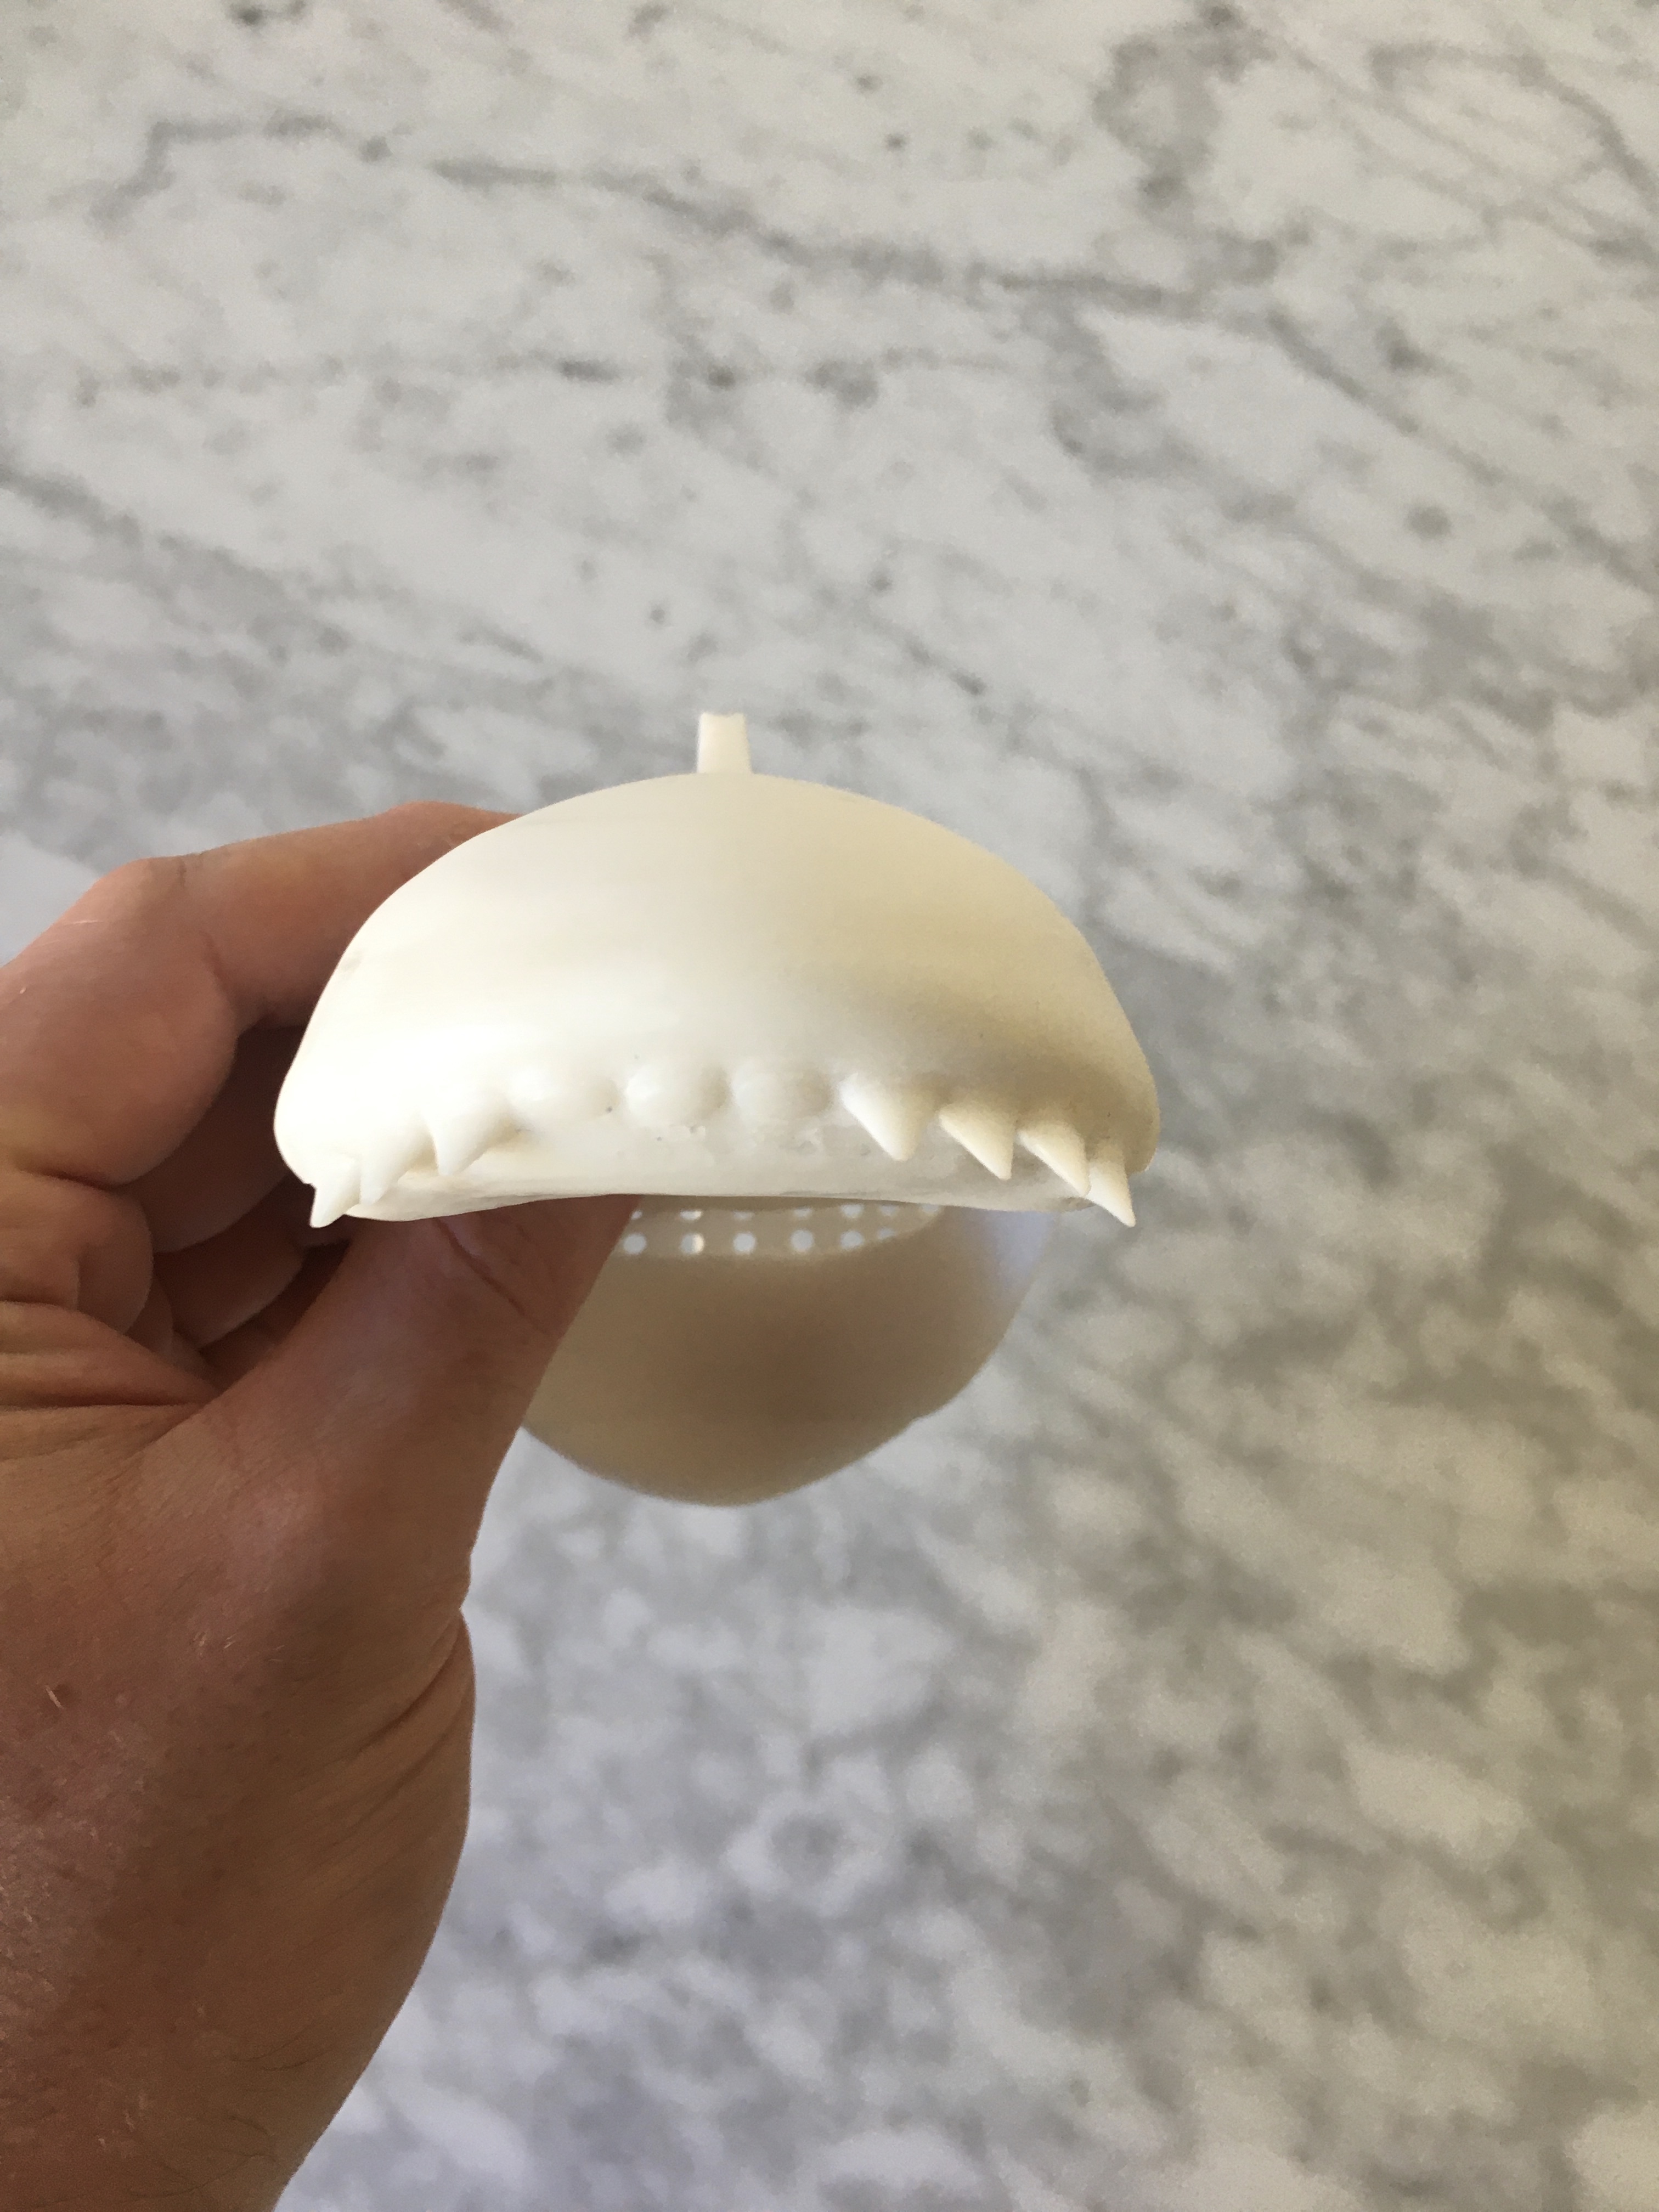 Loona 3D printed shark hat